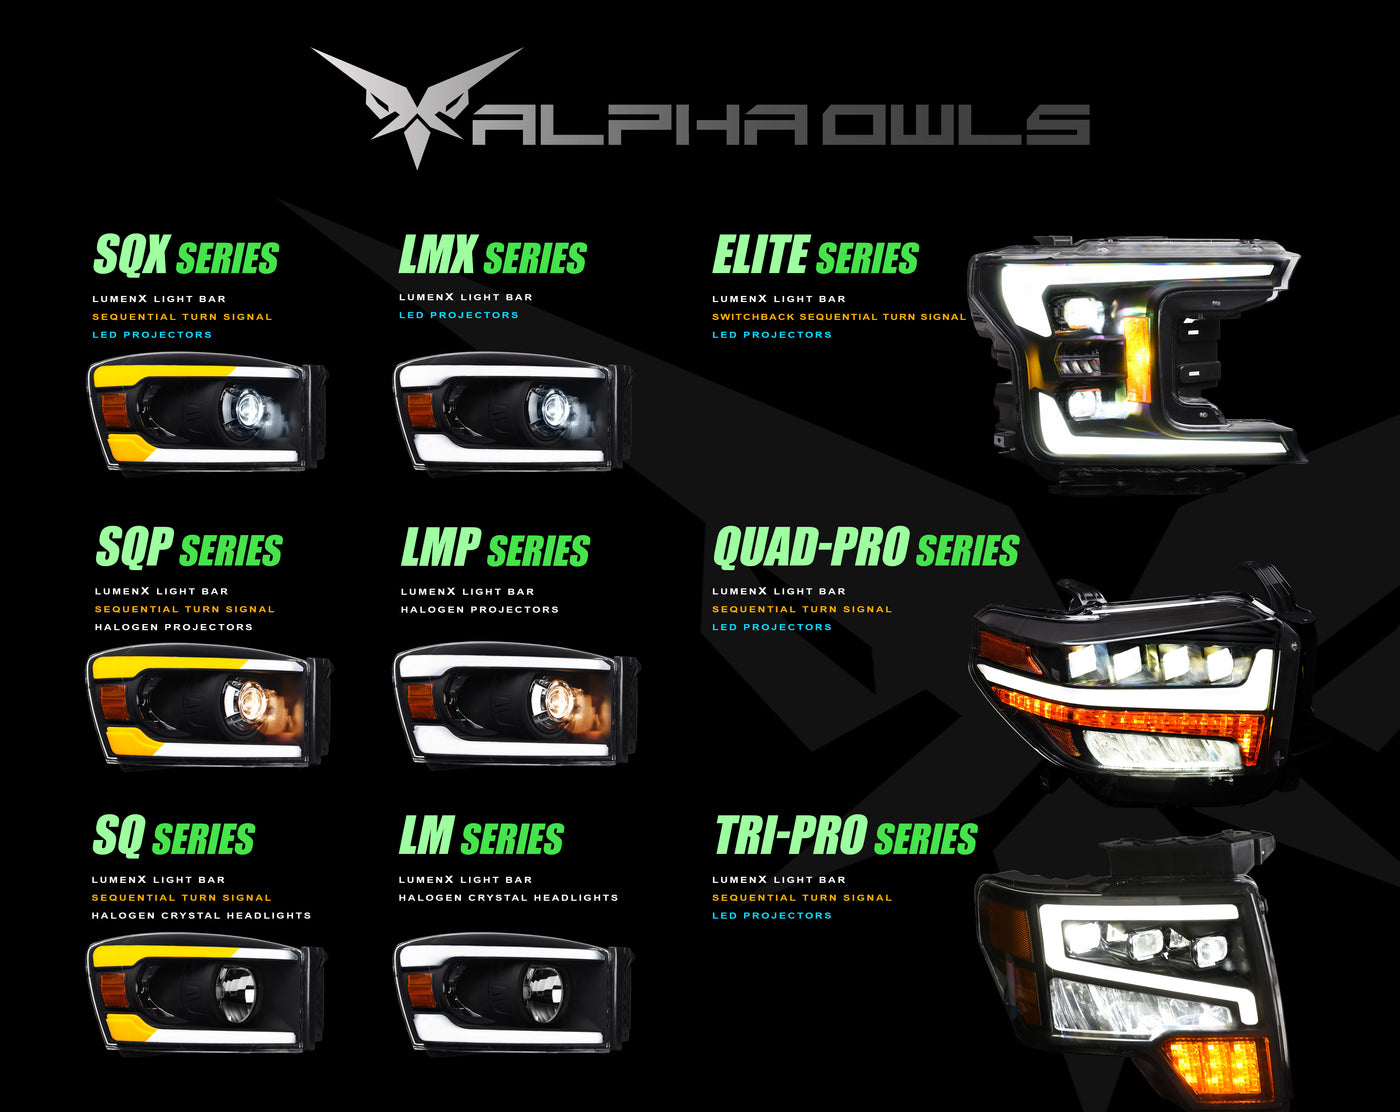 Alpha OwlsHeadlights, Dodge Ram 2500/3500 Headlights, Projector Headlights, 2003-2005 Headlights, Chrome Headlights